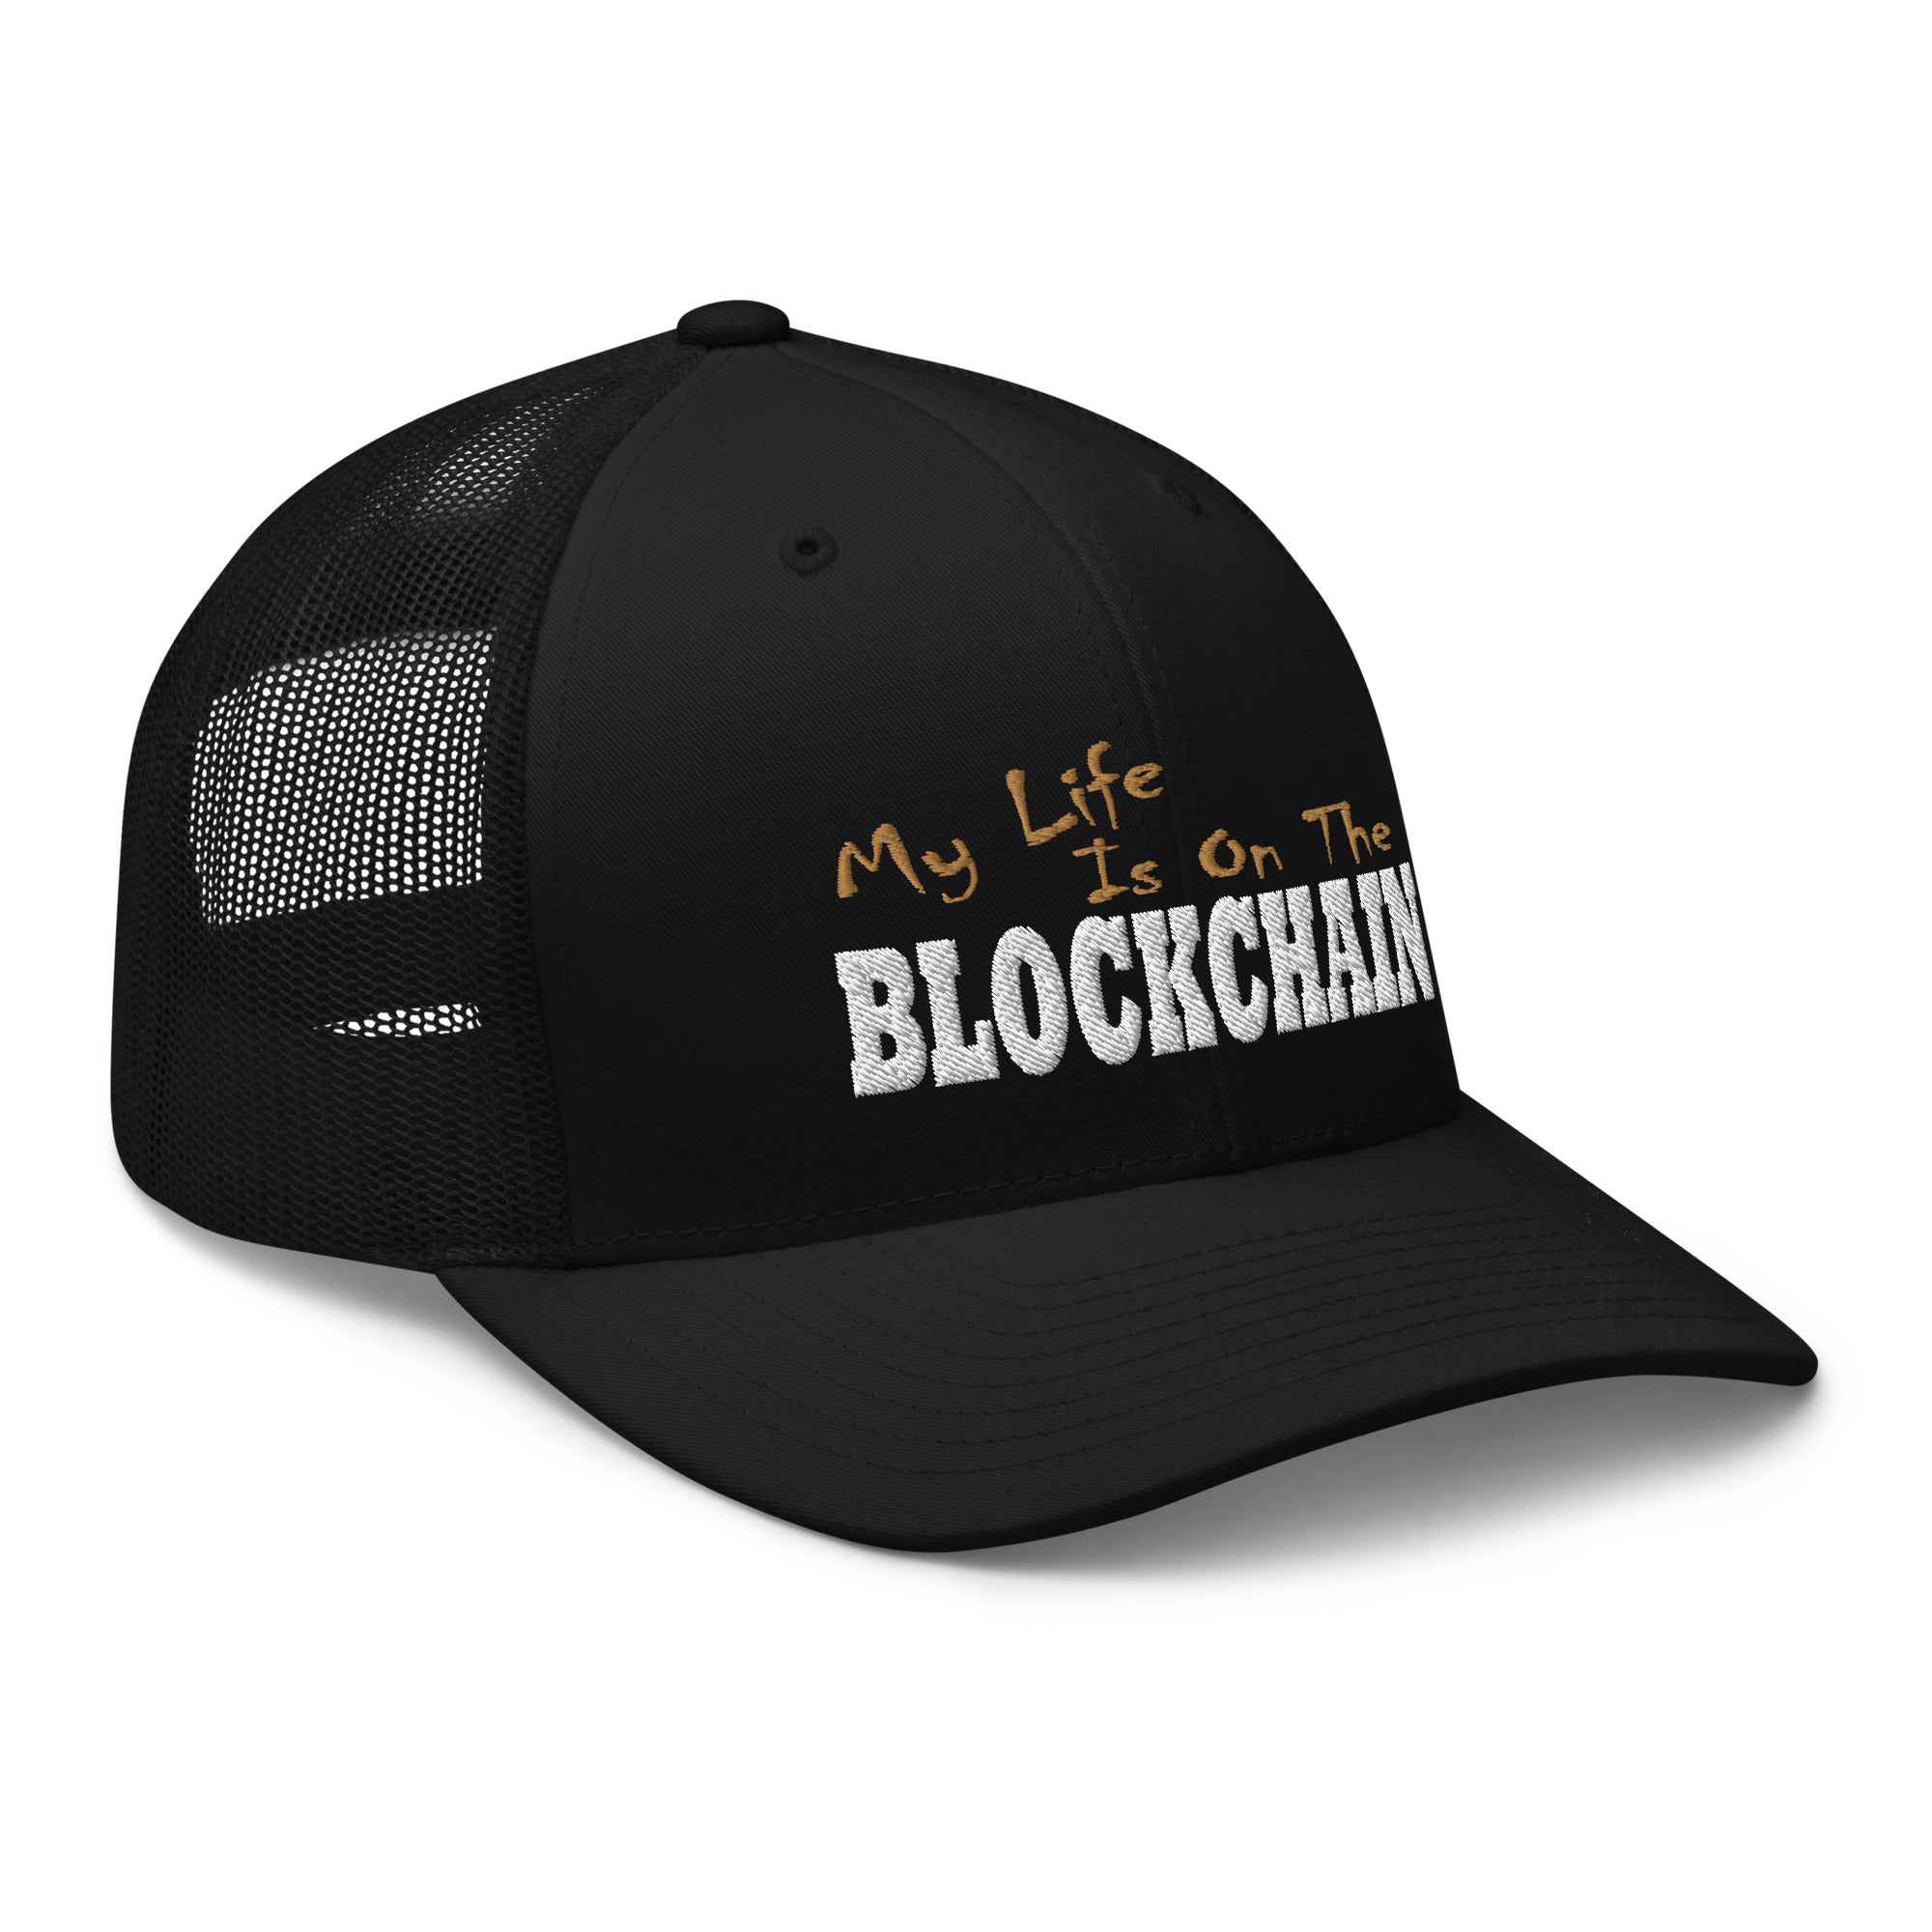 My Life is on the Blockchain Crypto Satire Bitcoin Trucker Cap Snapback Hat